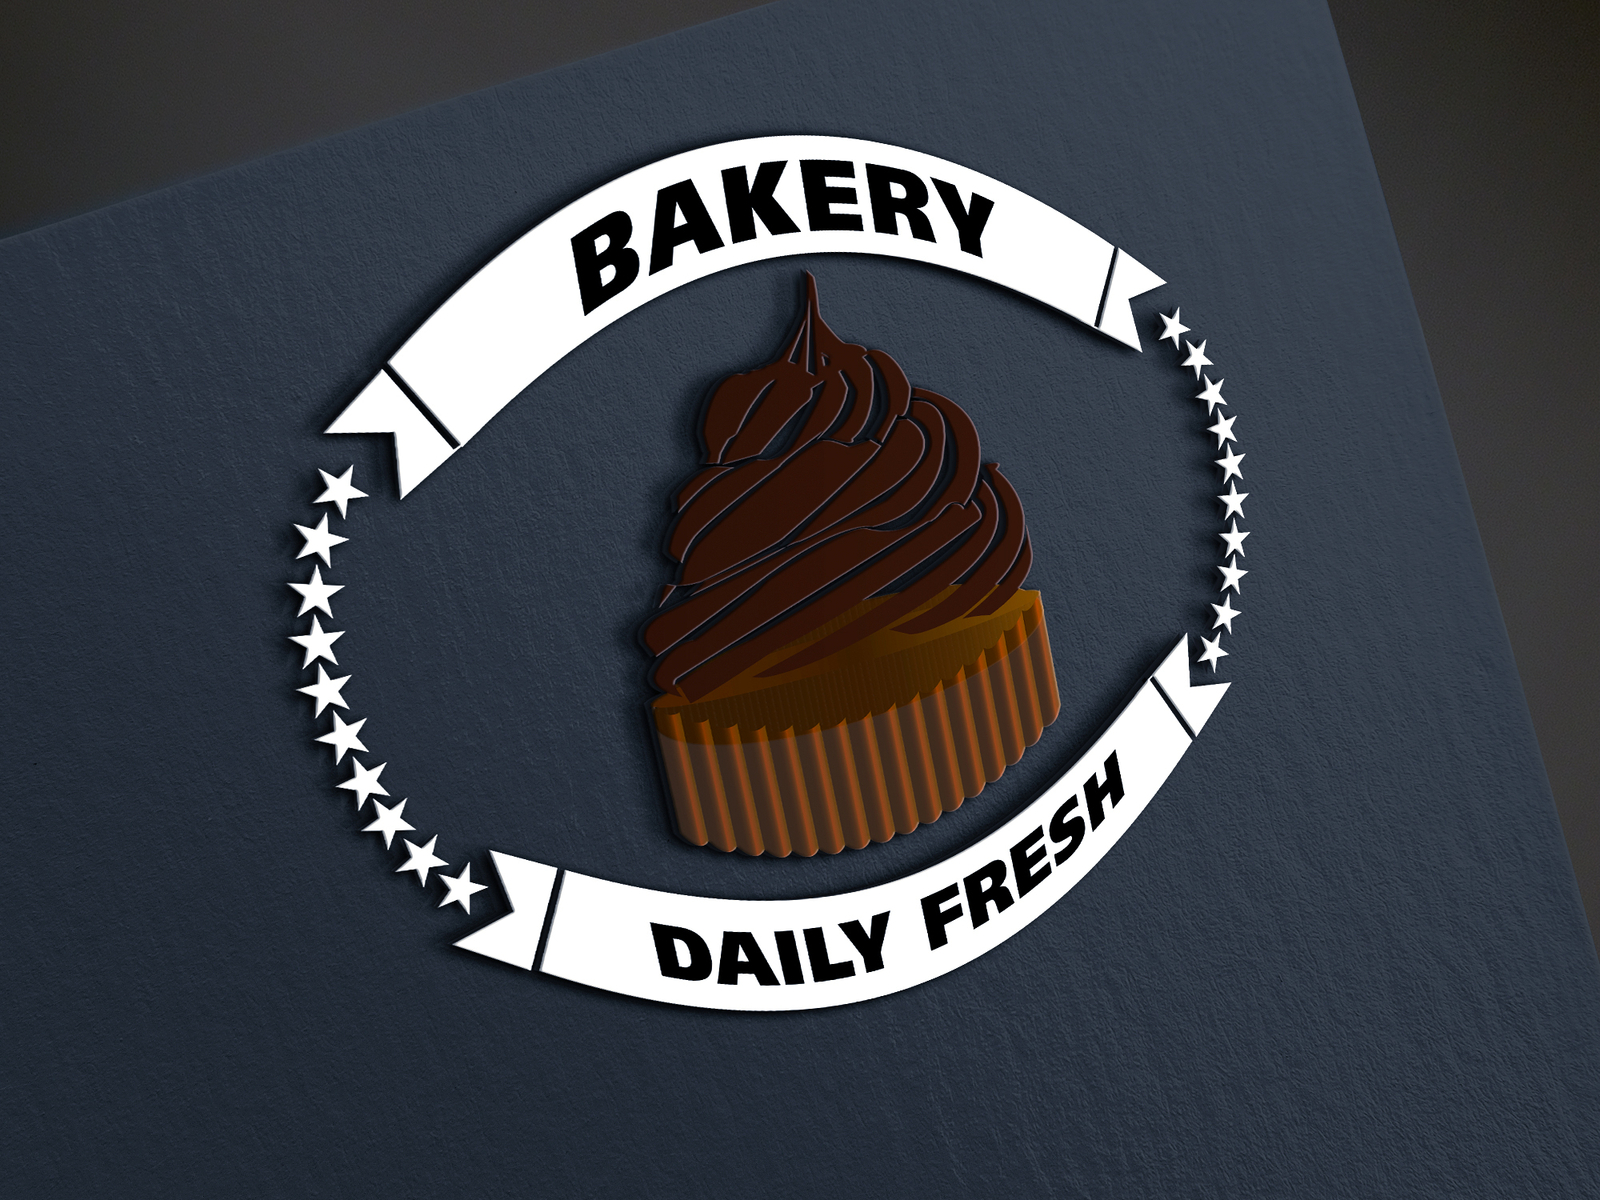 Cake Logos - 406+ Best Cake Logo Ideas. Free Cake Logo Maker. | 99designs